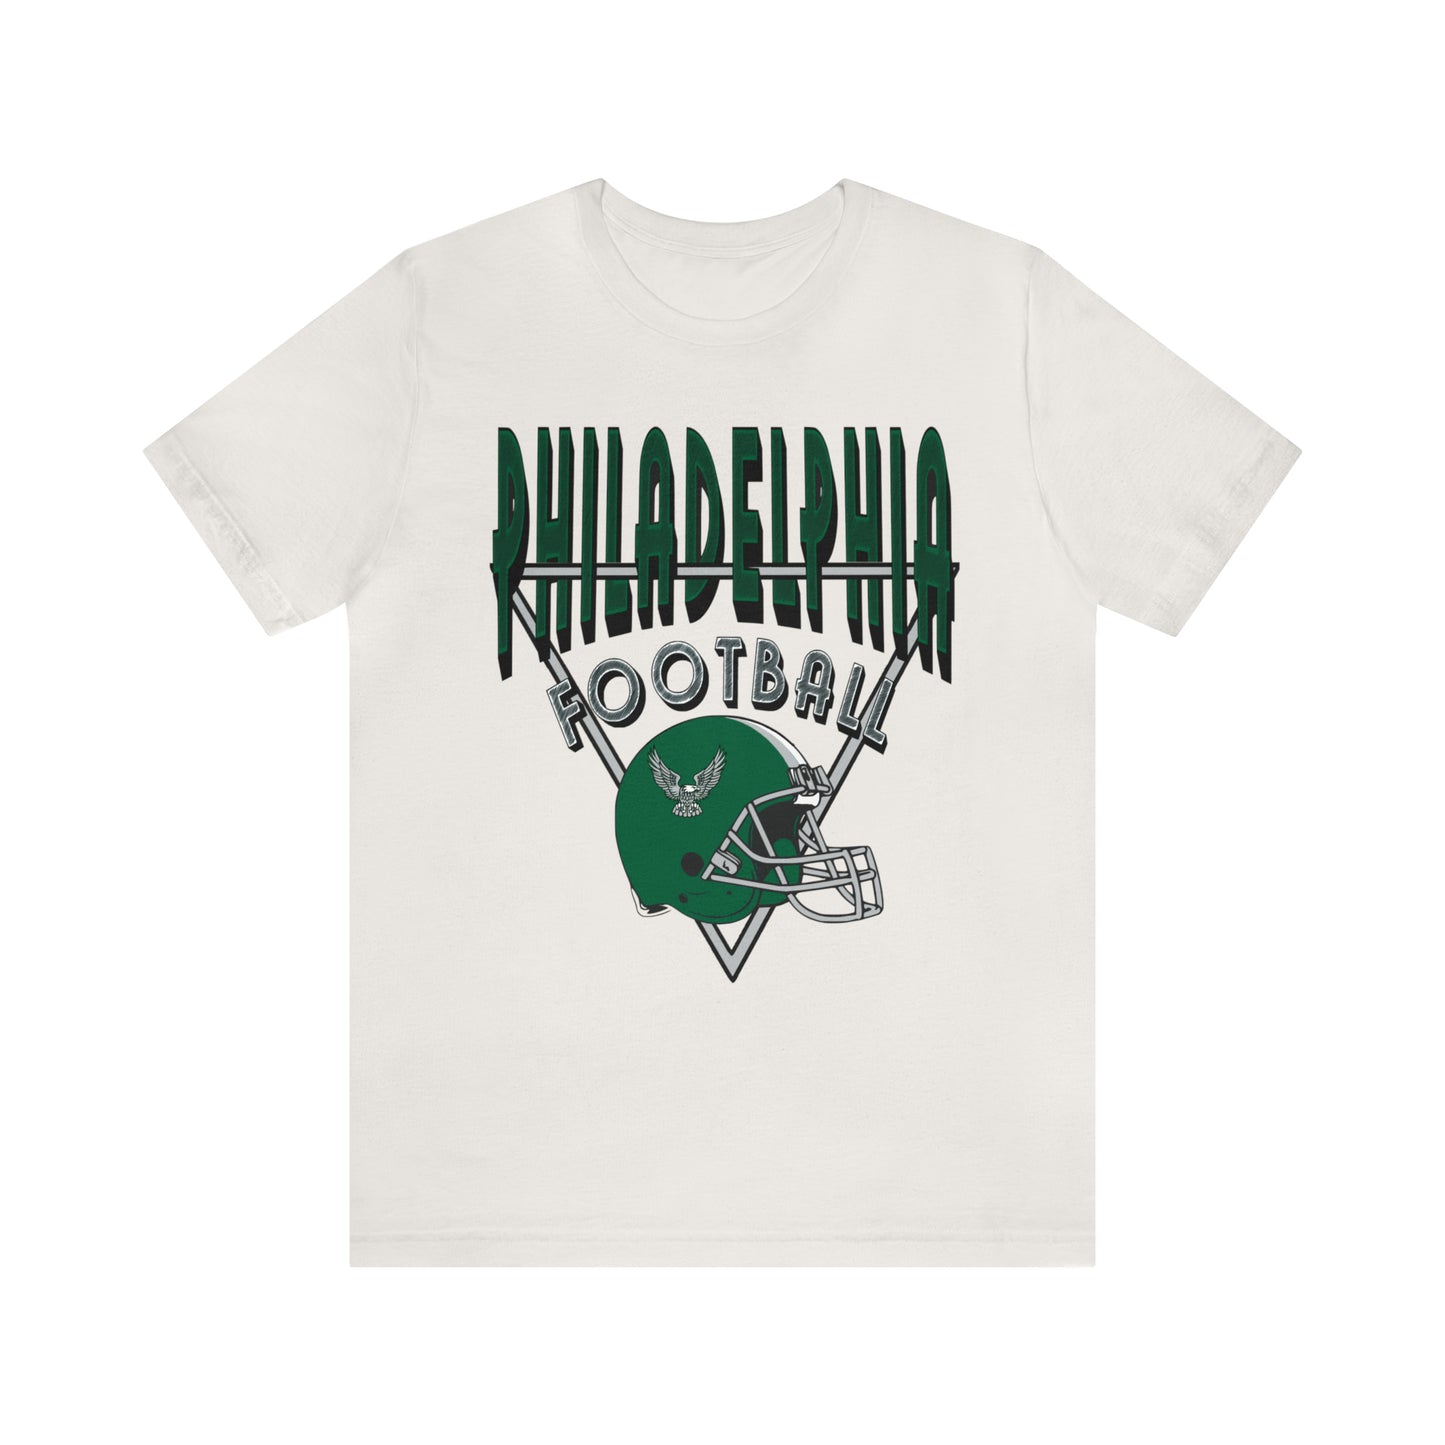 Throwback Vintage Philadelphia Eagles Tee - 90's Short Sleeve T-Shirt - NFL Football Men's & Women's Apparel - Design 3